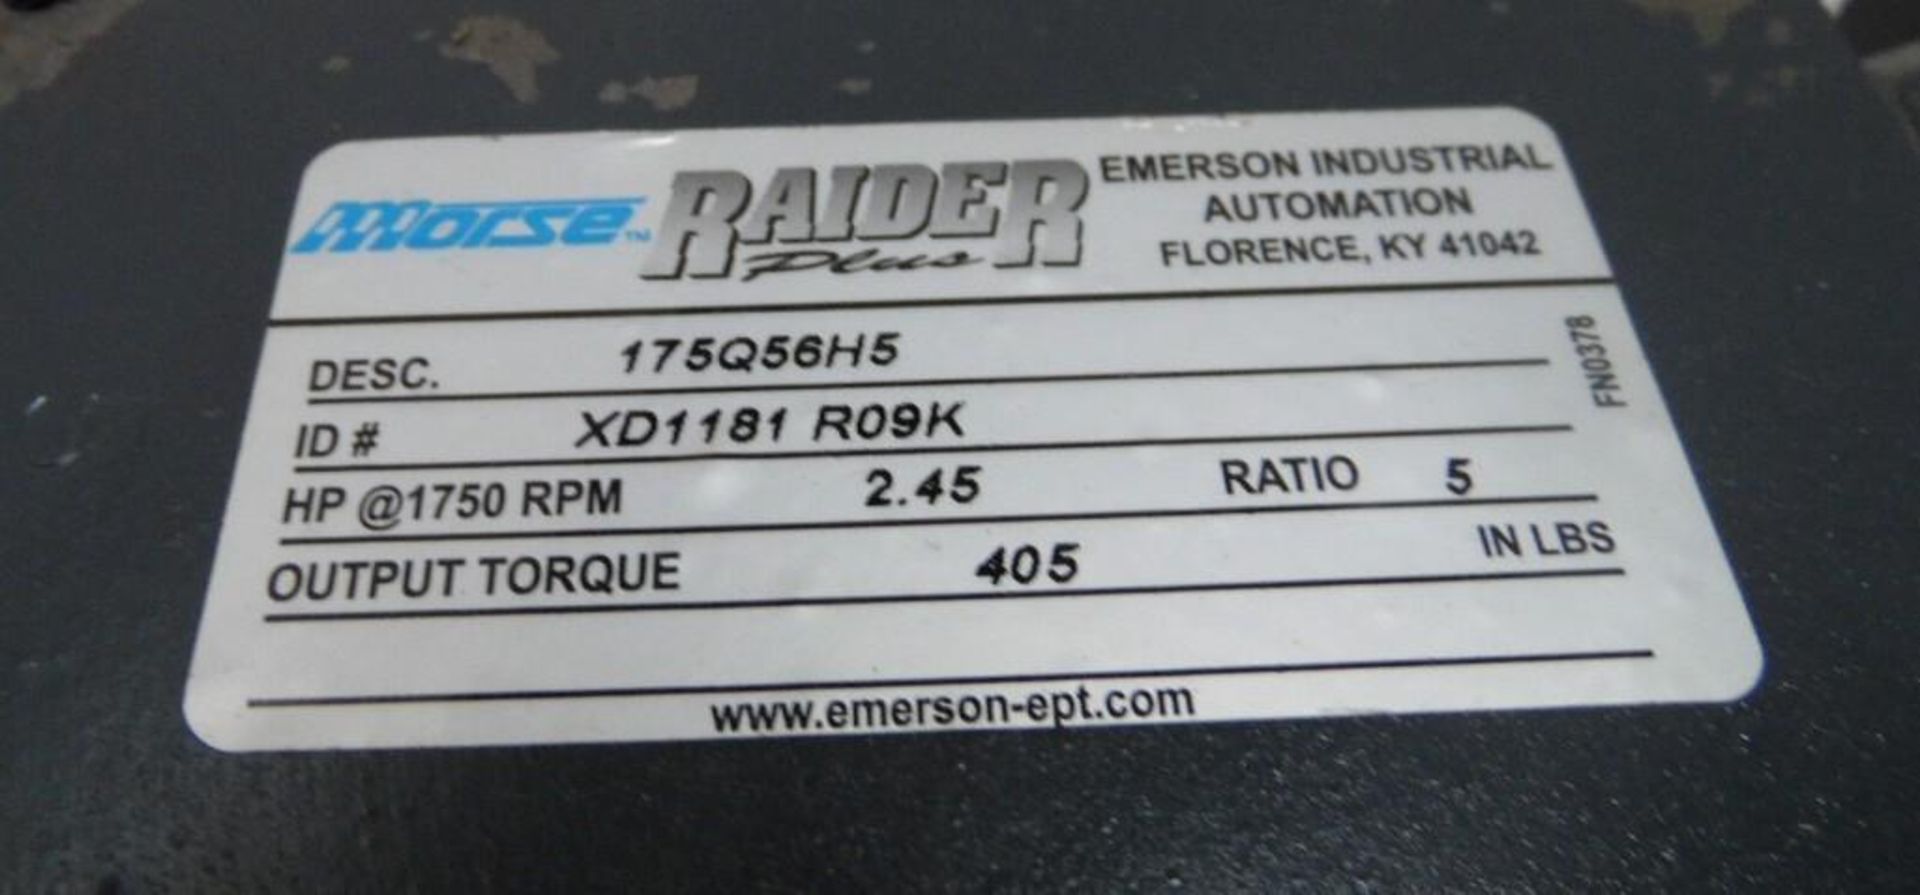 New Morse Raider Plus Gear Reducer, 2.45 HP, 5:1 Ratio, # 175Q56H5 - Image 2 of 2